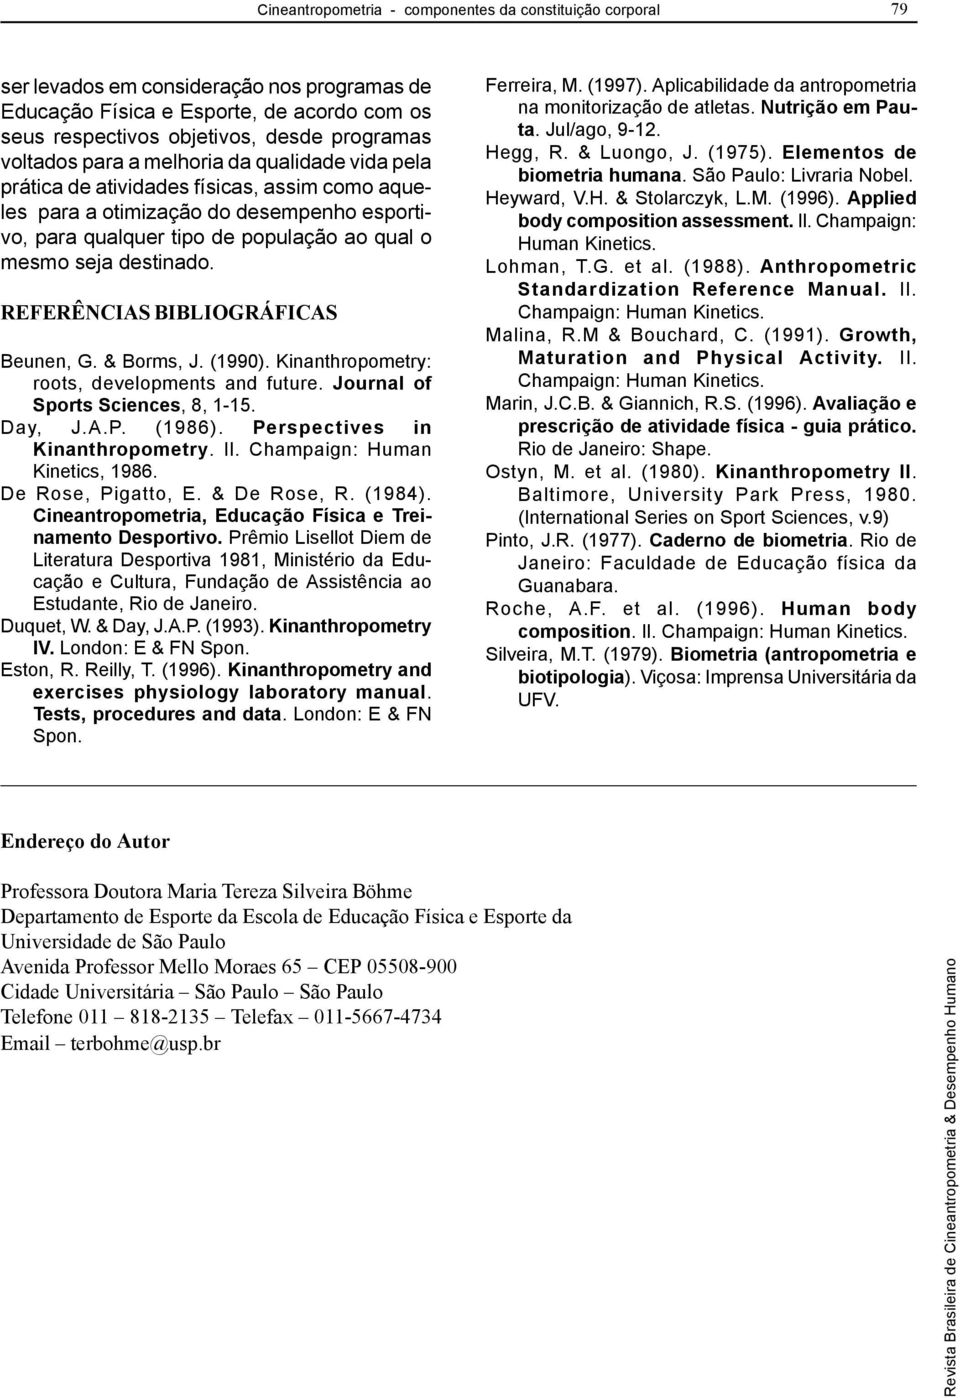 destinado. REFERÊNCIAS BIBLIOGRÁFICAS Beunen, G. & Borms, J. (1990). Kinanthropometry: roots, developments and future. Journal of Sports Sciences, 8, 1-15. Day, J.A.P. (1986).